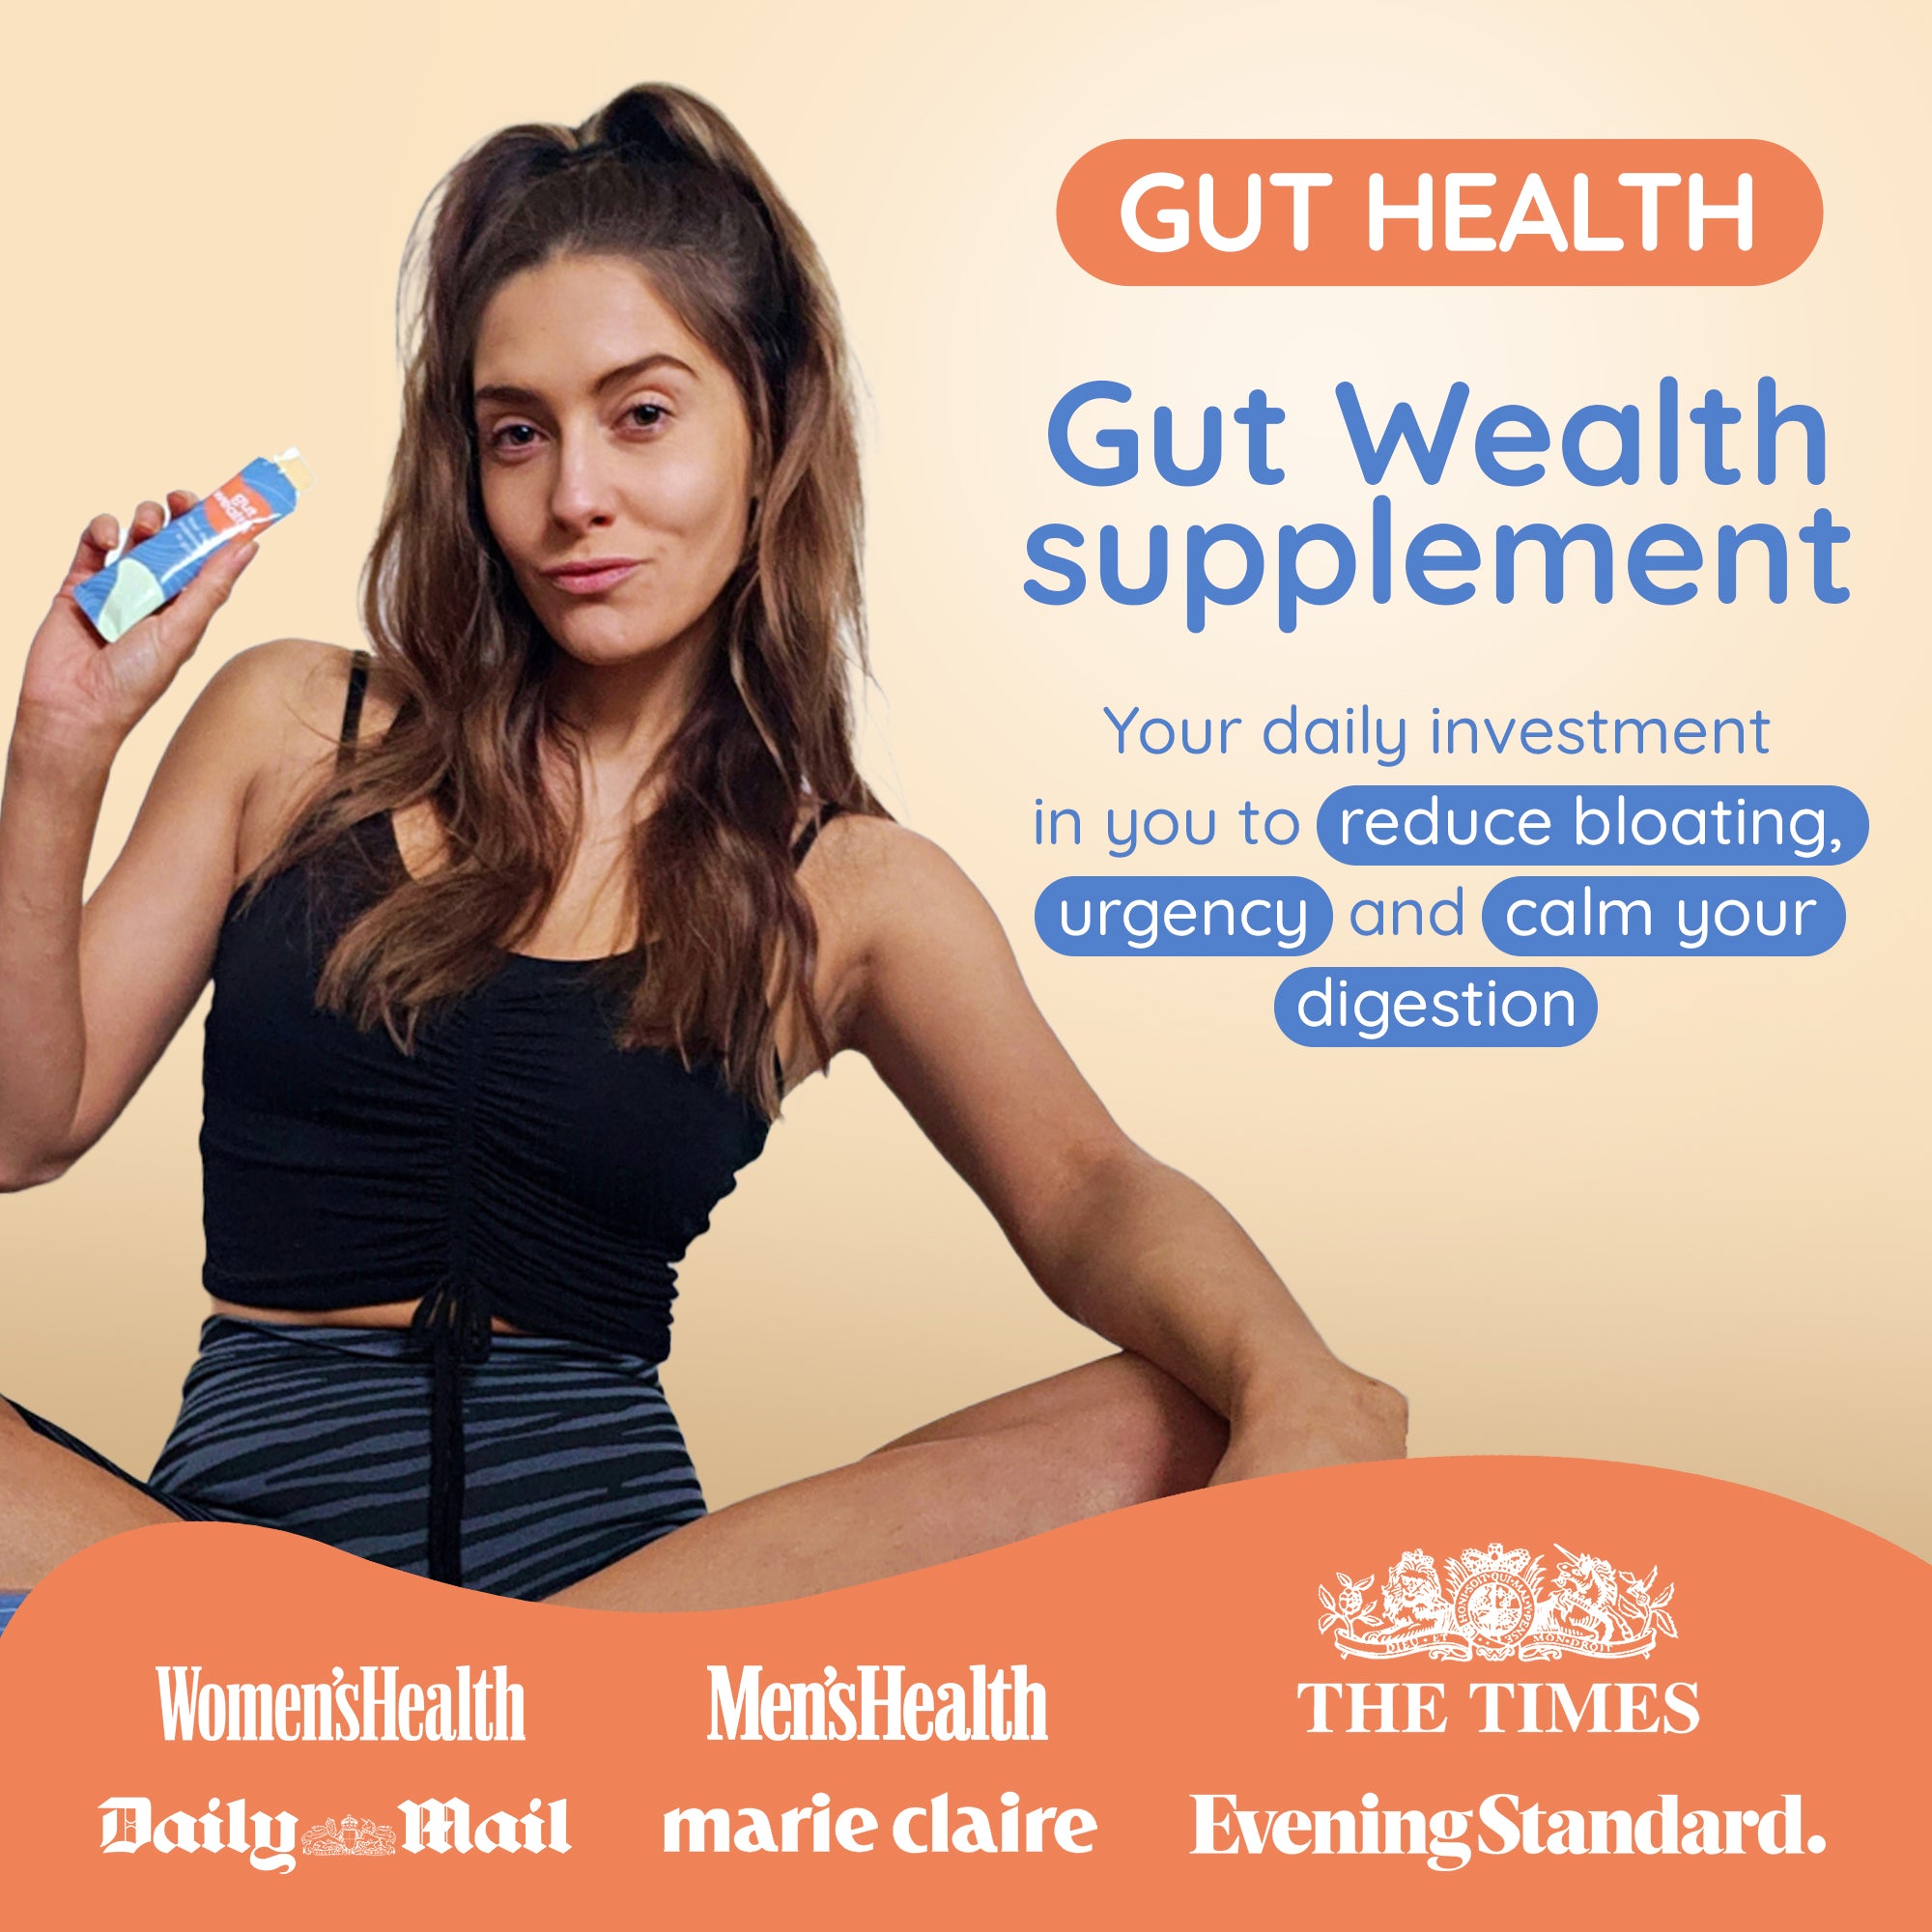 Gut Wealth® calms digestive upset and improves bowel regularity